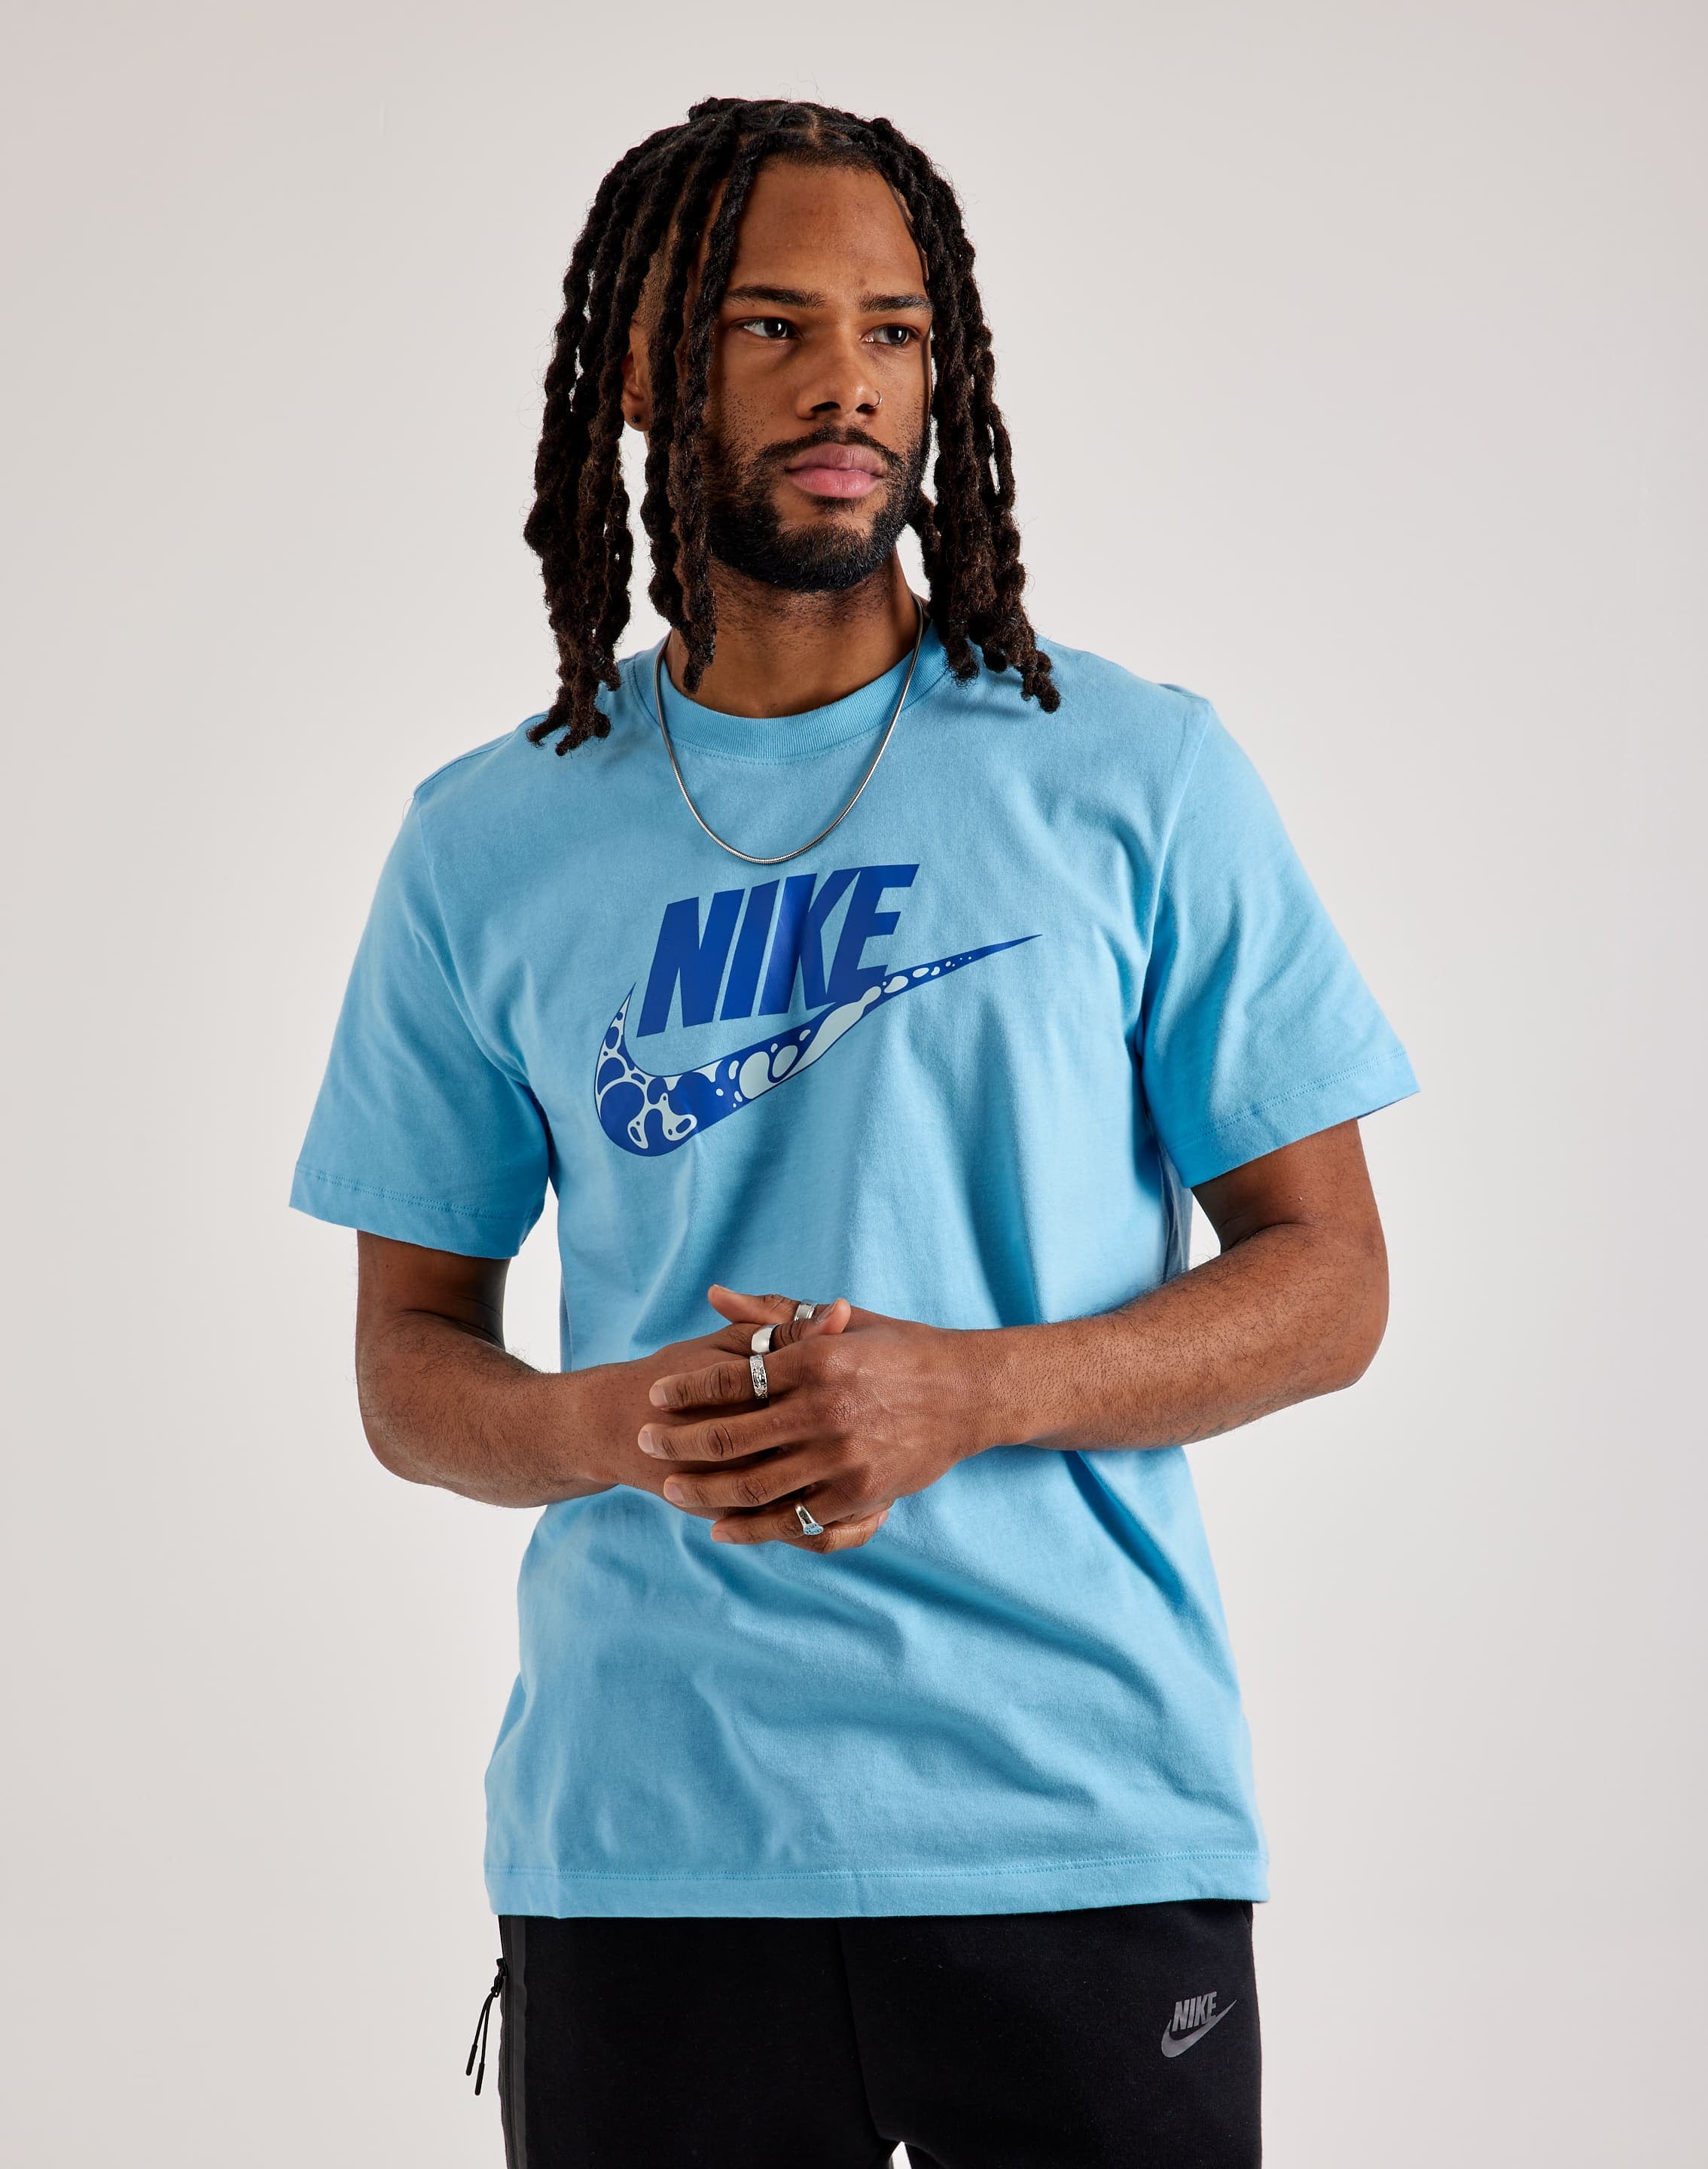 NIKE FUTURO TEE Collection Brasil Soccer Football T-Shirt XL Blue